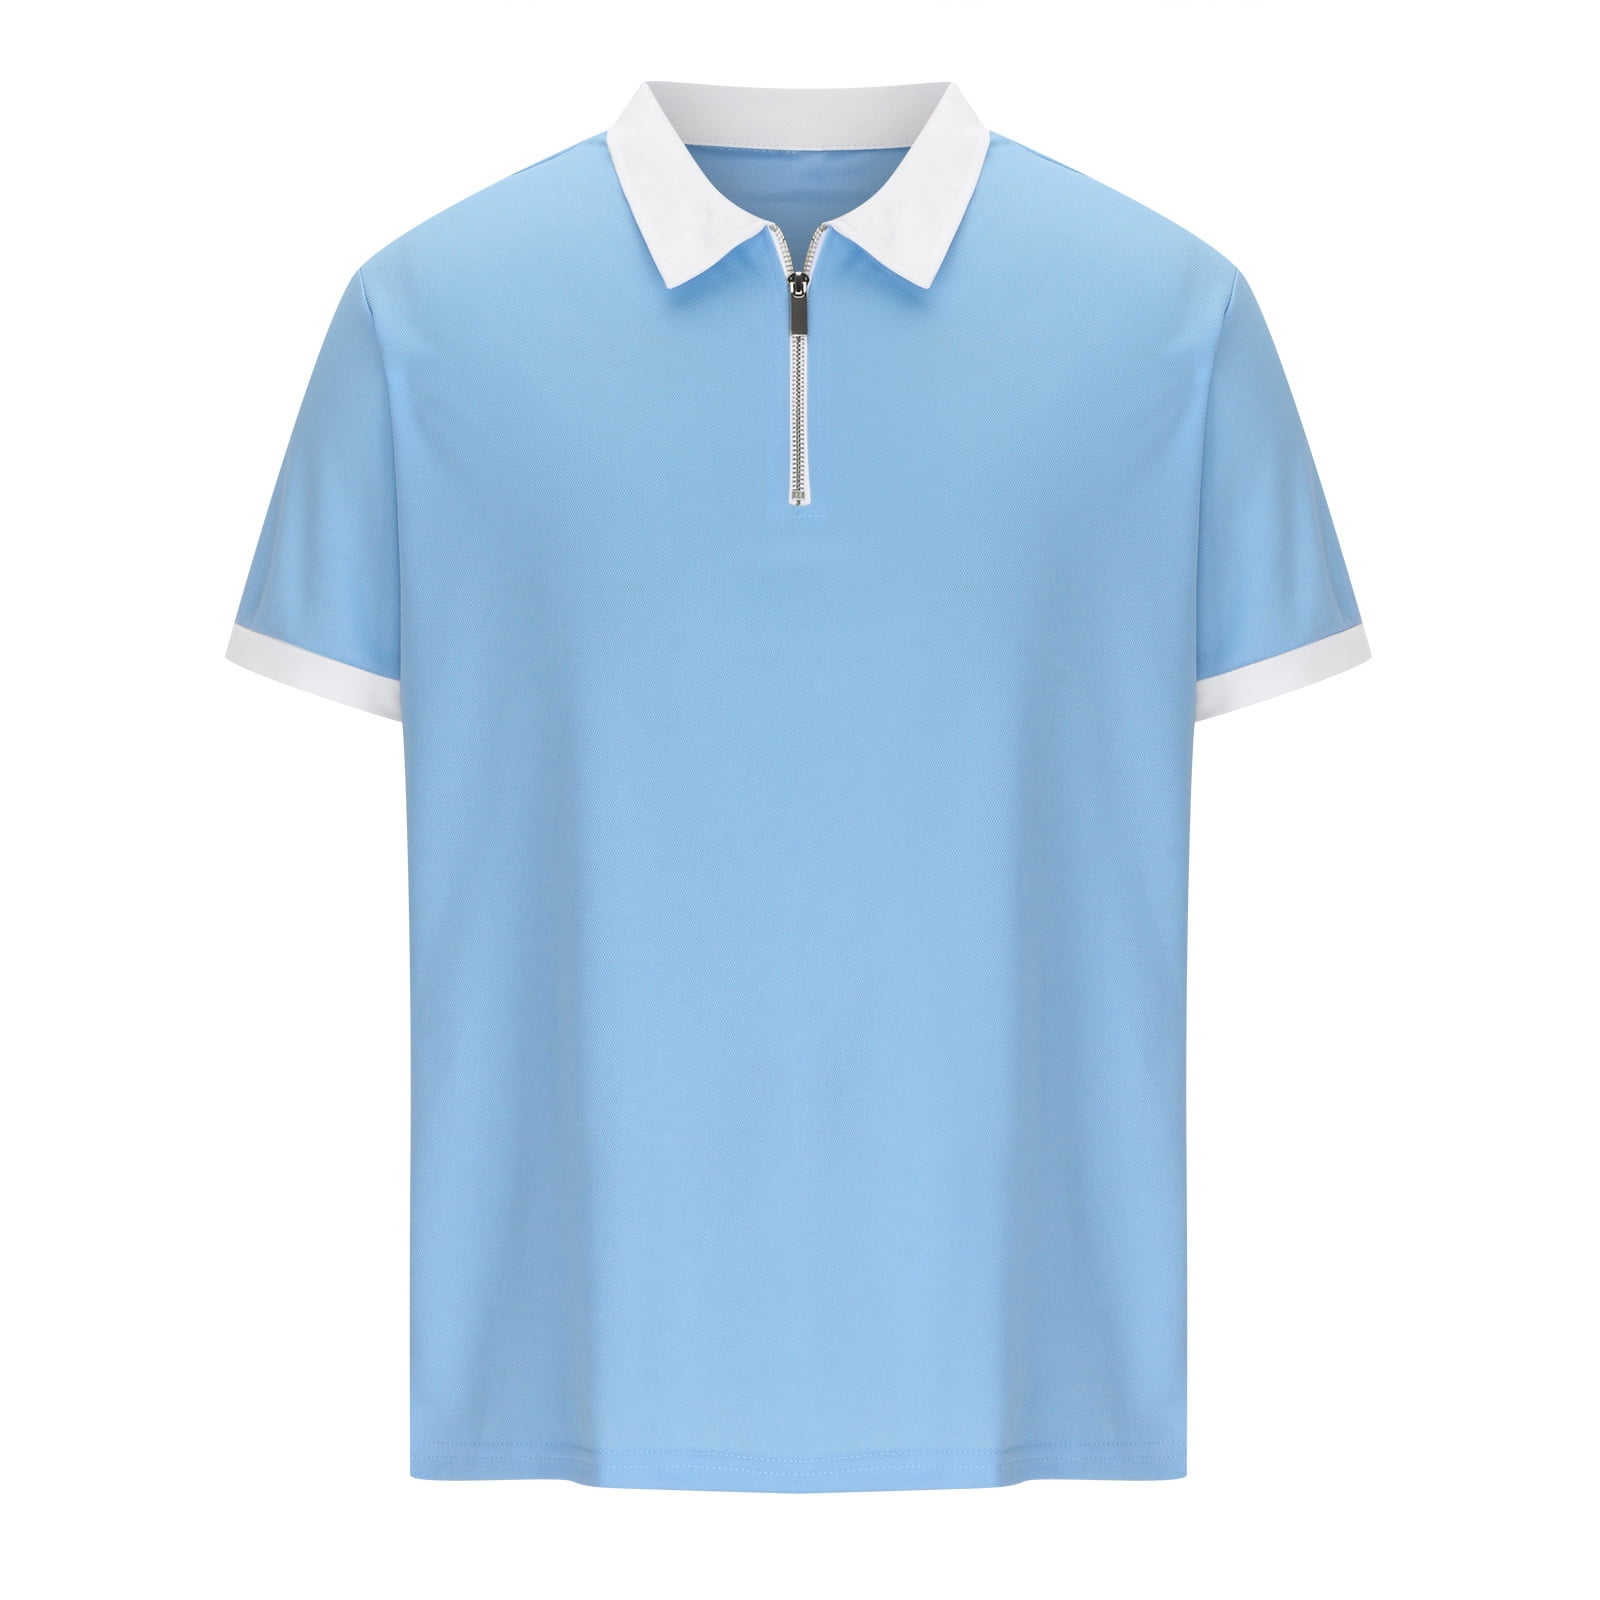 YYDGH Men's Zipper Polo Shirt Casual Knit Short Sleeve Polo T